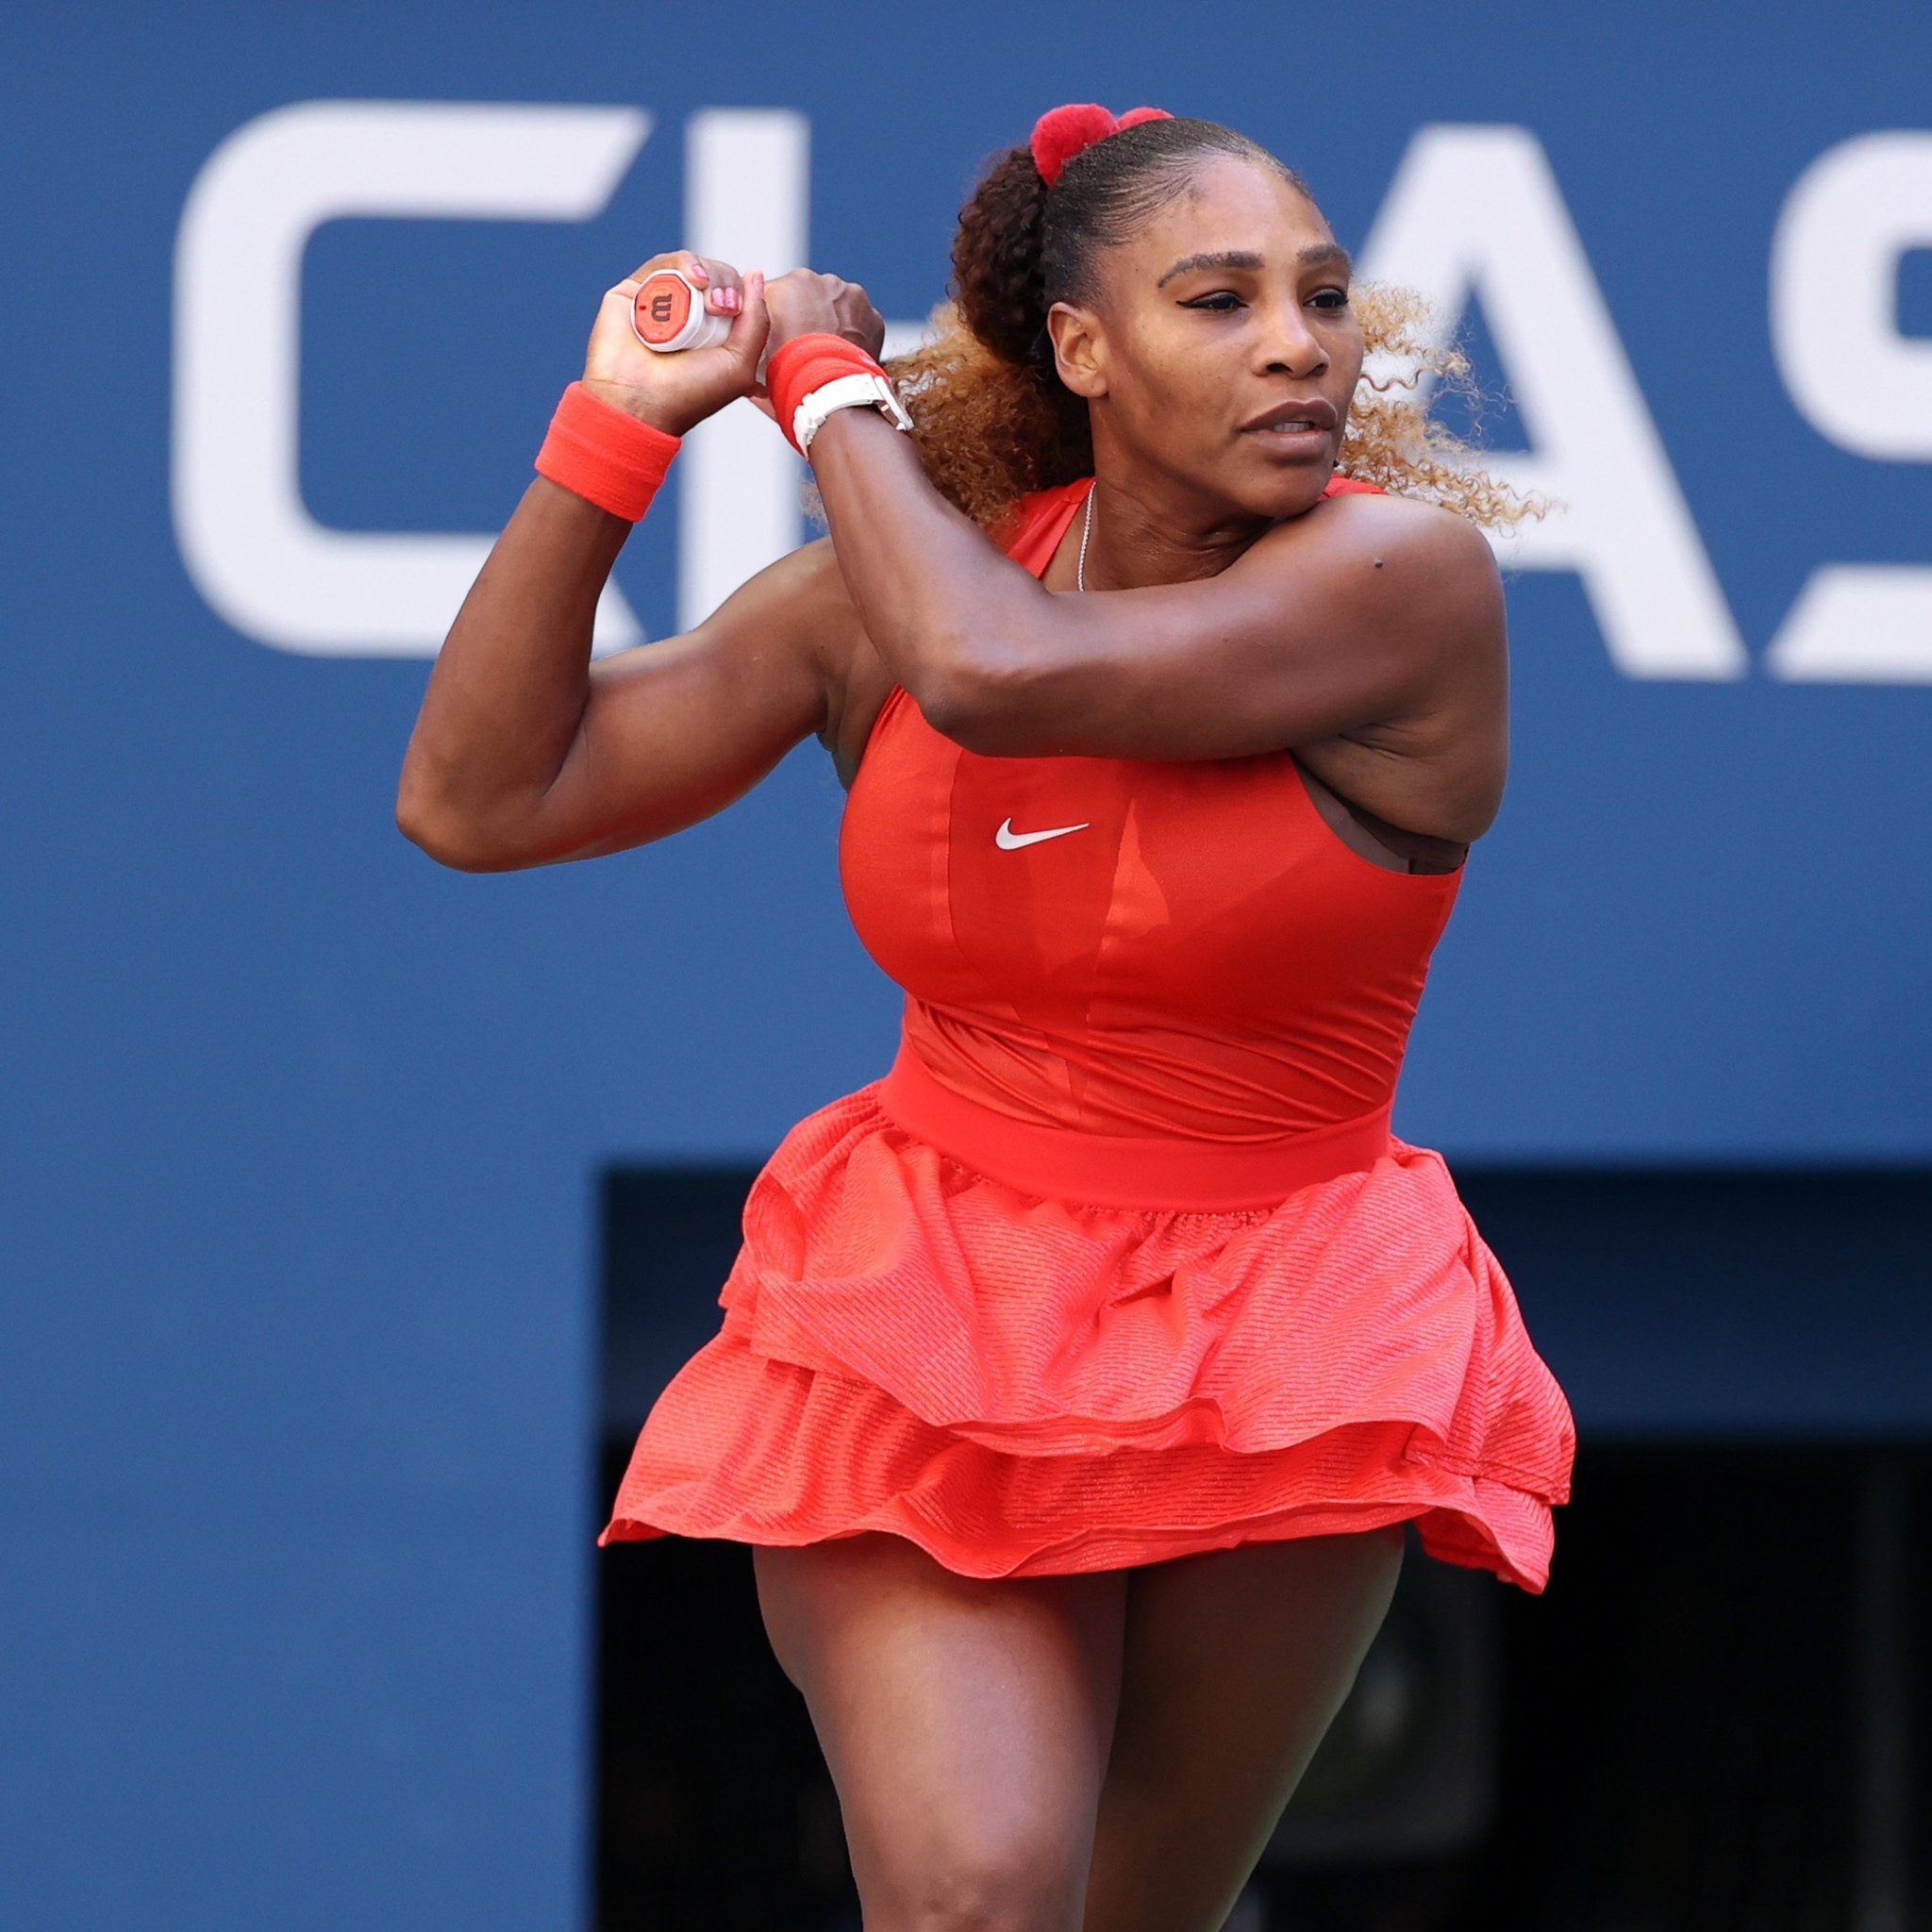 Mother superior: Serena, Azarenka move into US Open semis